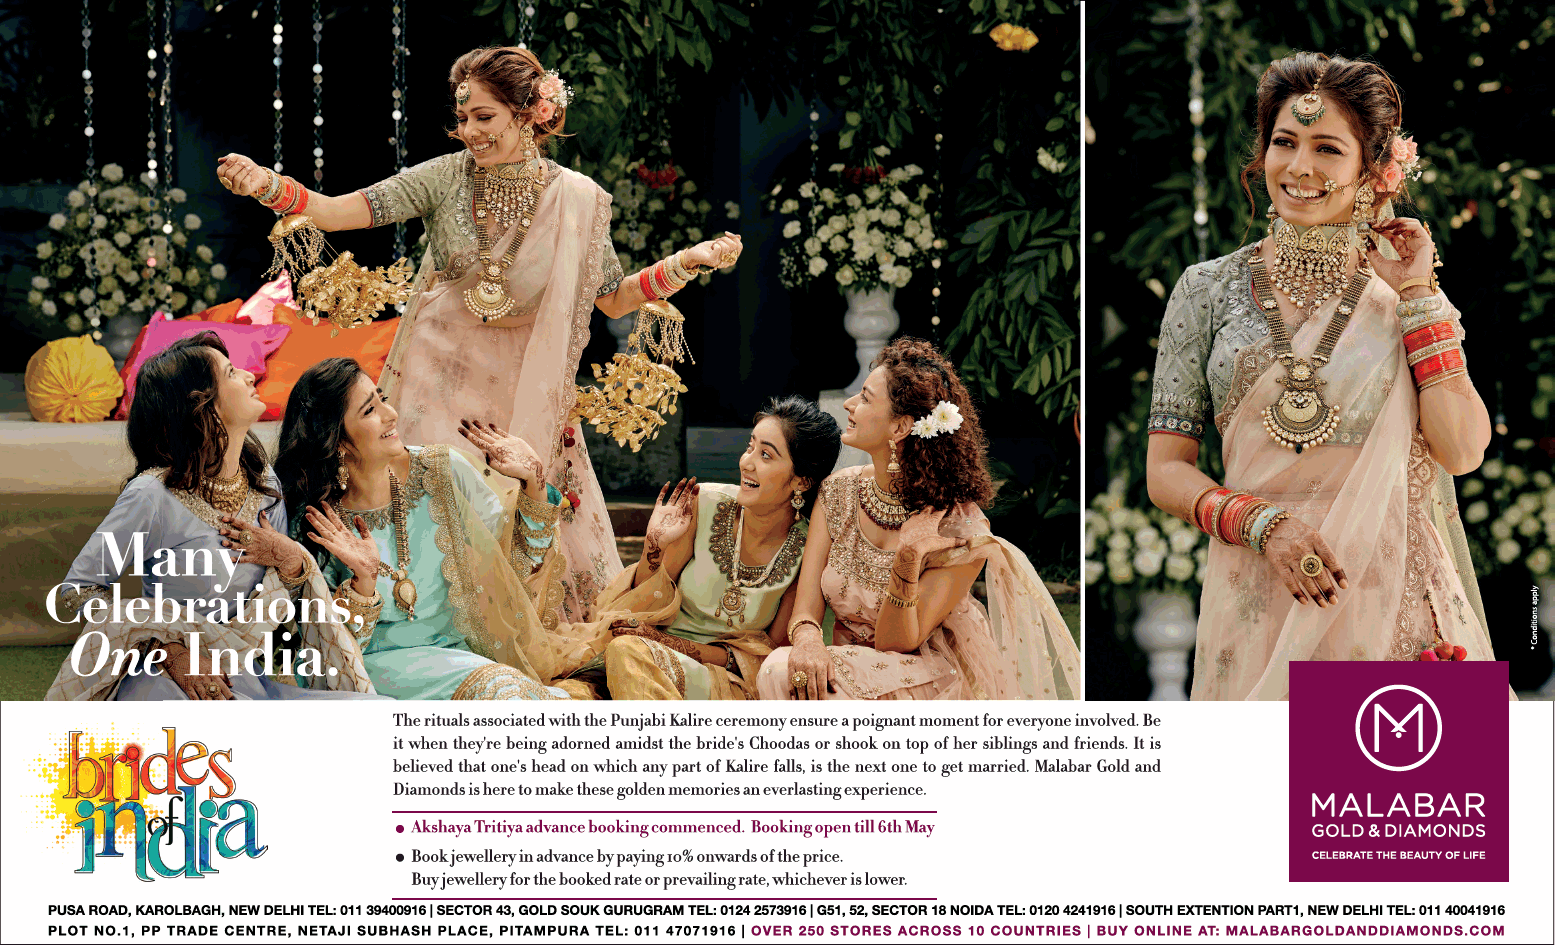 malabar-gold-and-diamonds-brides-of-india-ad-times-of-india-delhi-12-04-2019.png